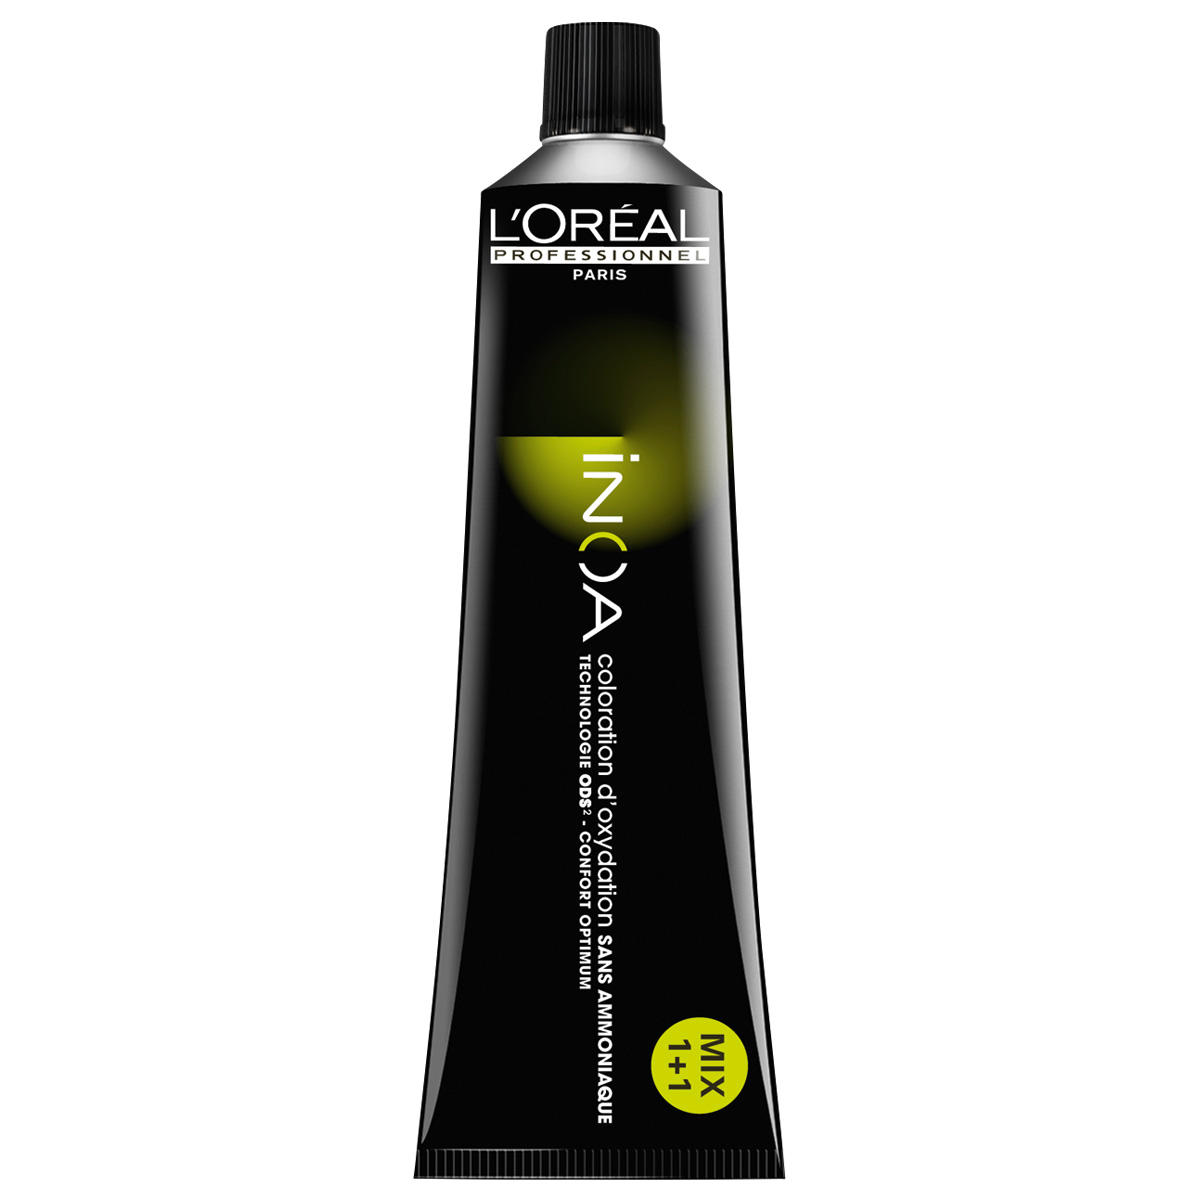 L'Oréal Professionnel Paris Coloration 4,8 Marrón Medio Moca, tubo 60 ml